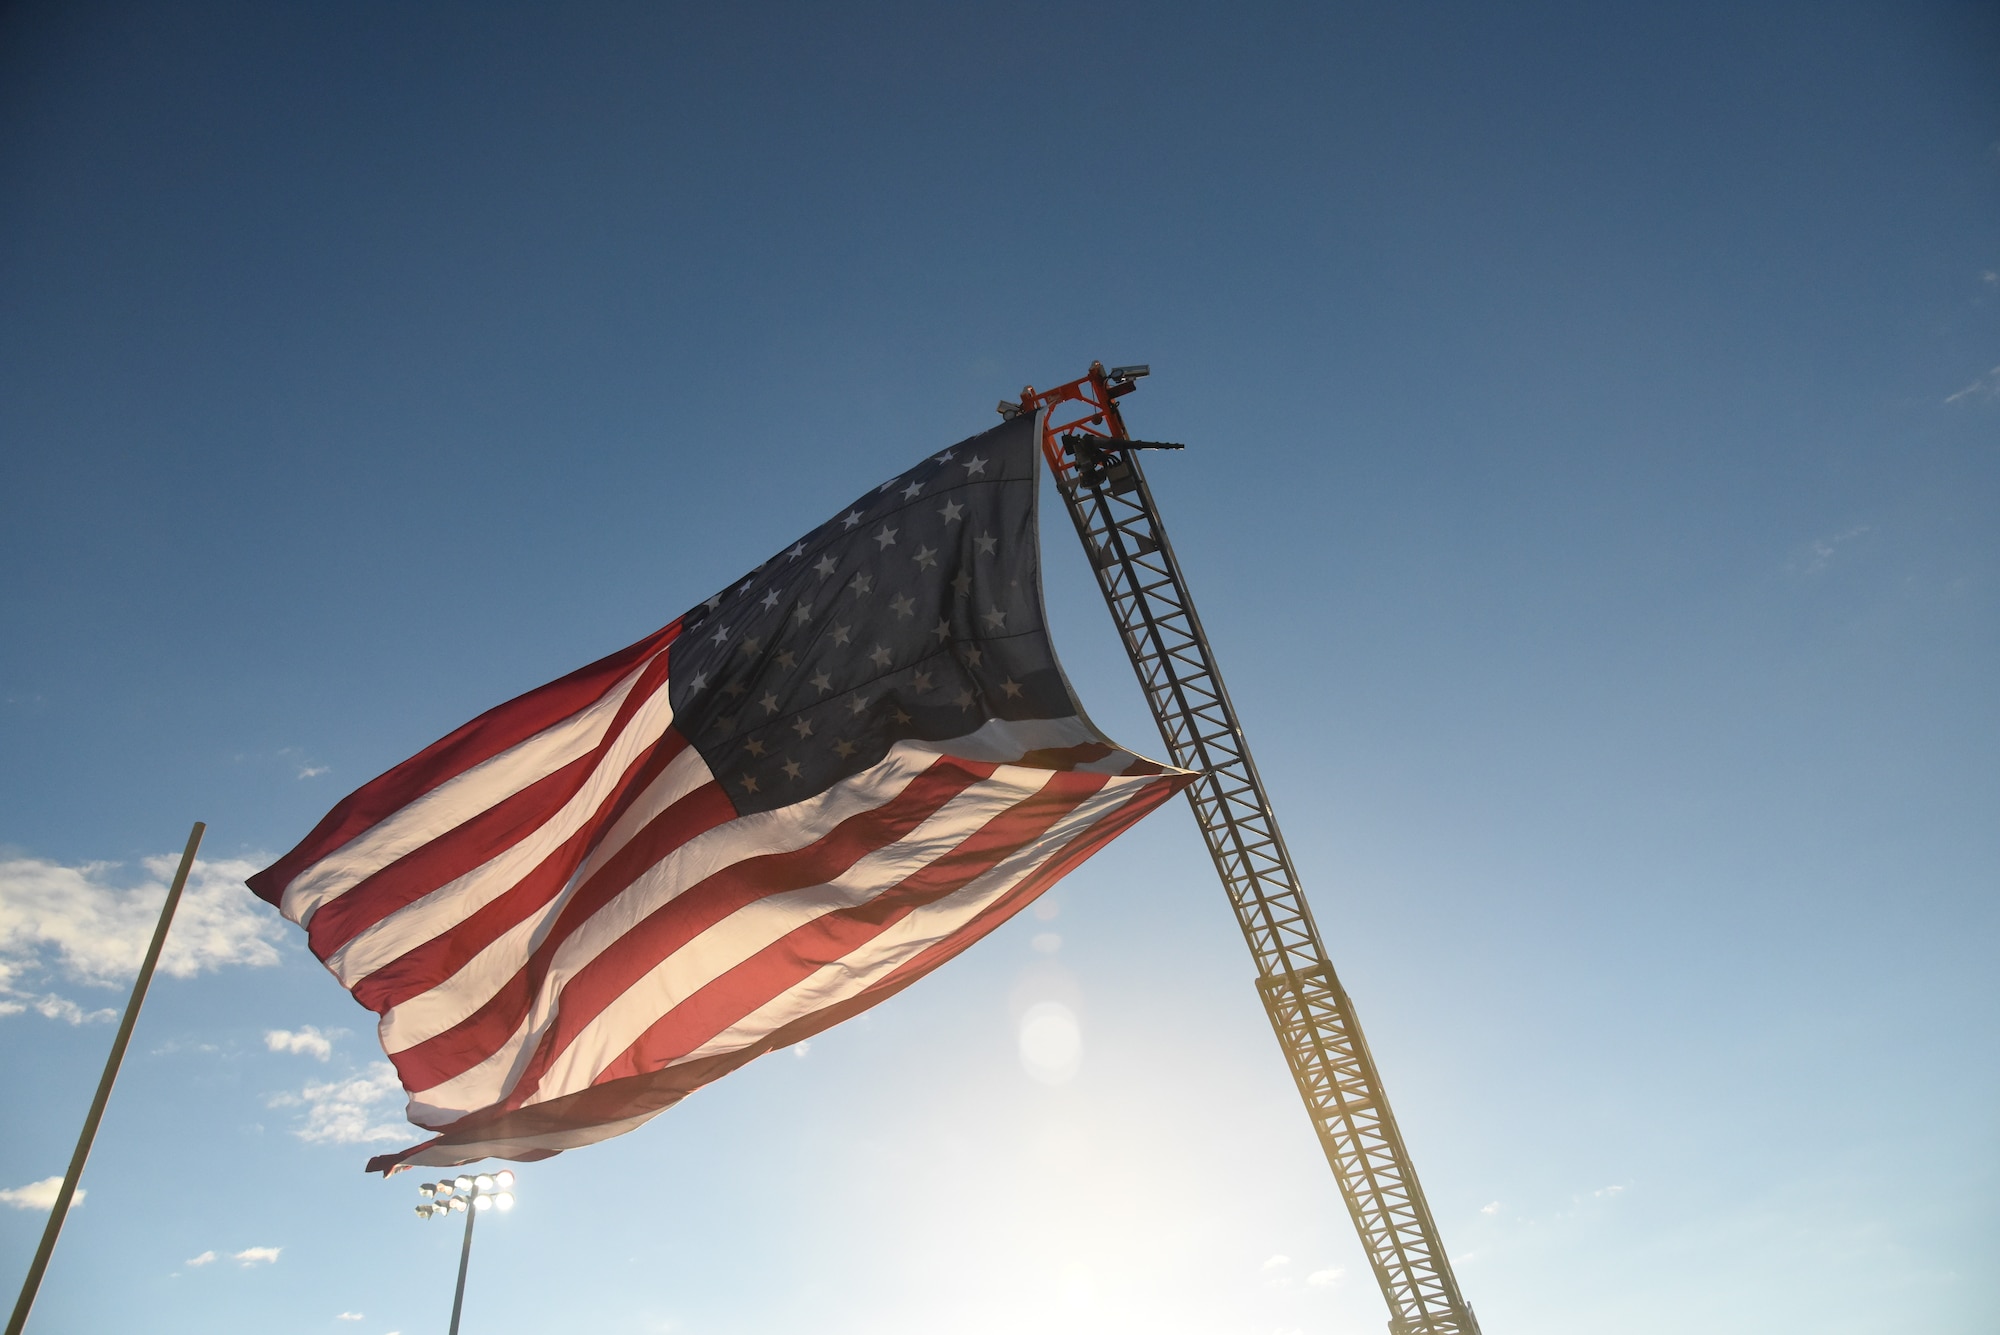 American flag flies high at football game.